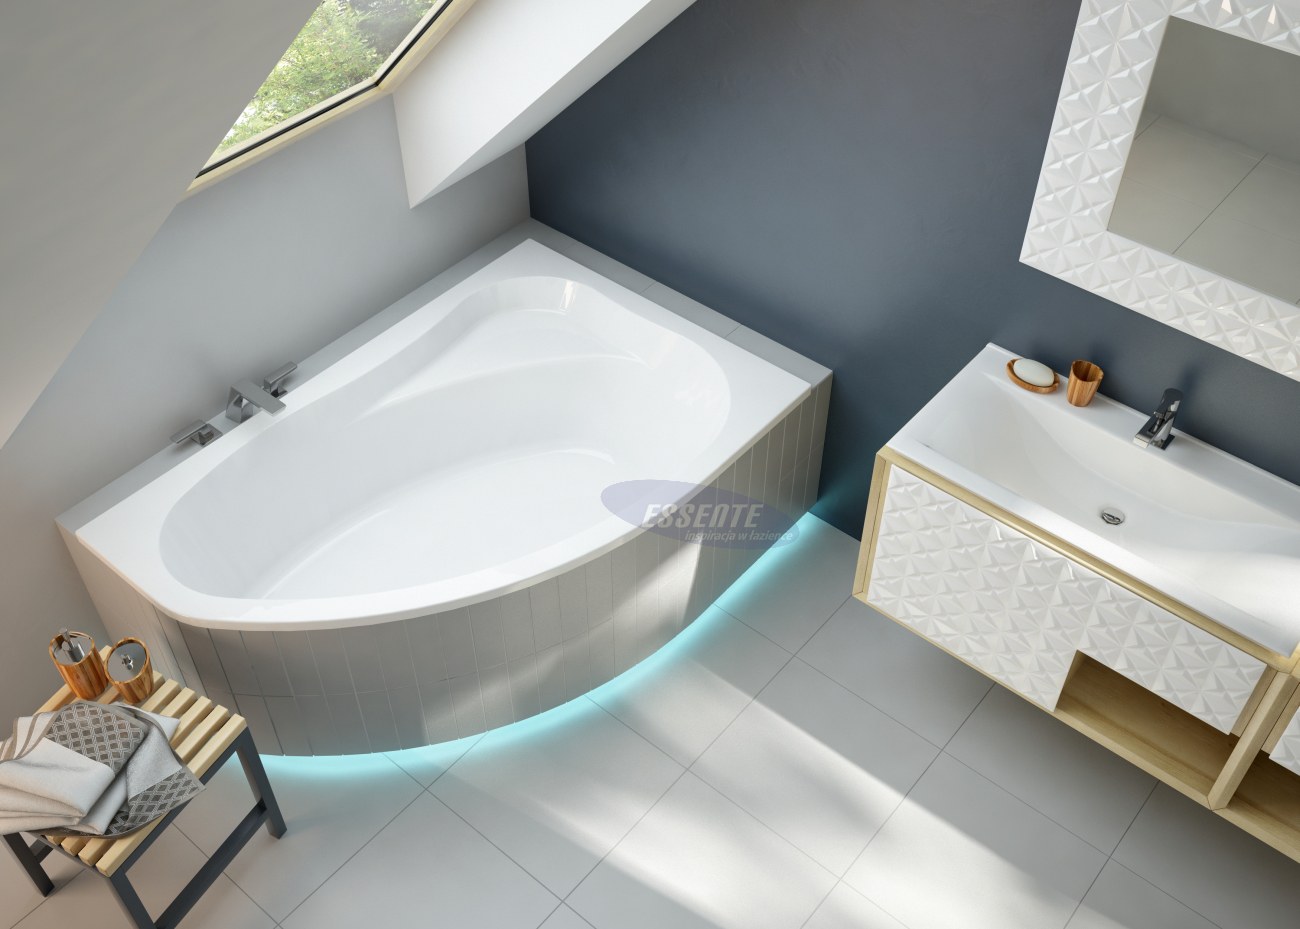 Arrangement of corner asymmetric right bathtub, IMPALA 150x100 cm - newest from ExclusiveLine series by ESSENTE!